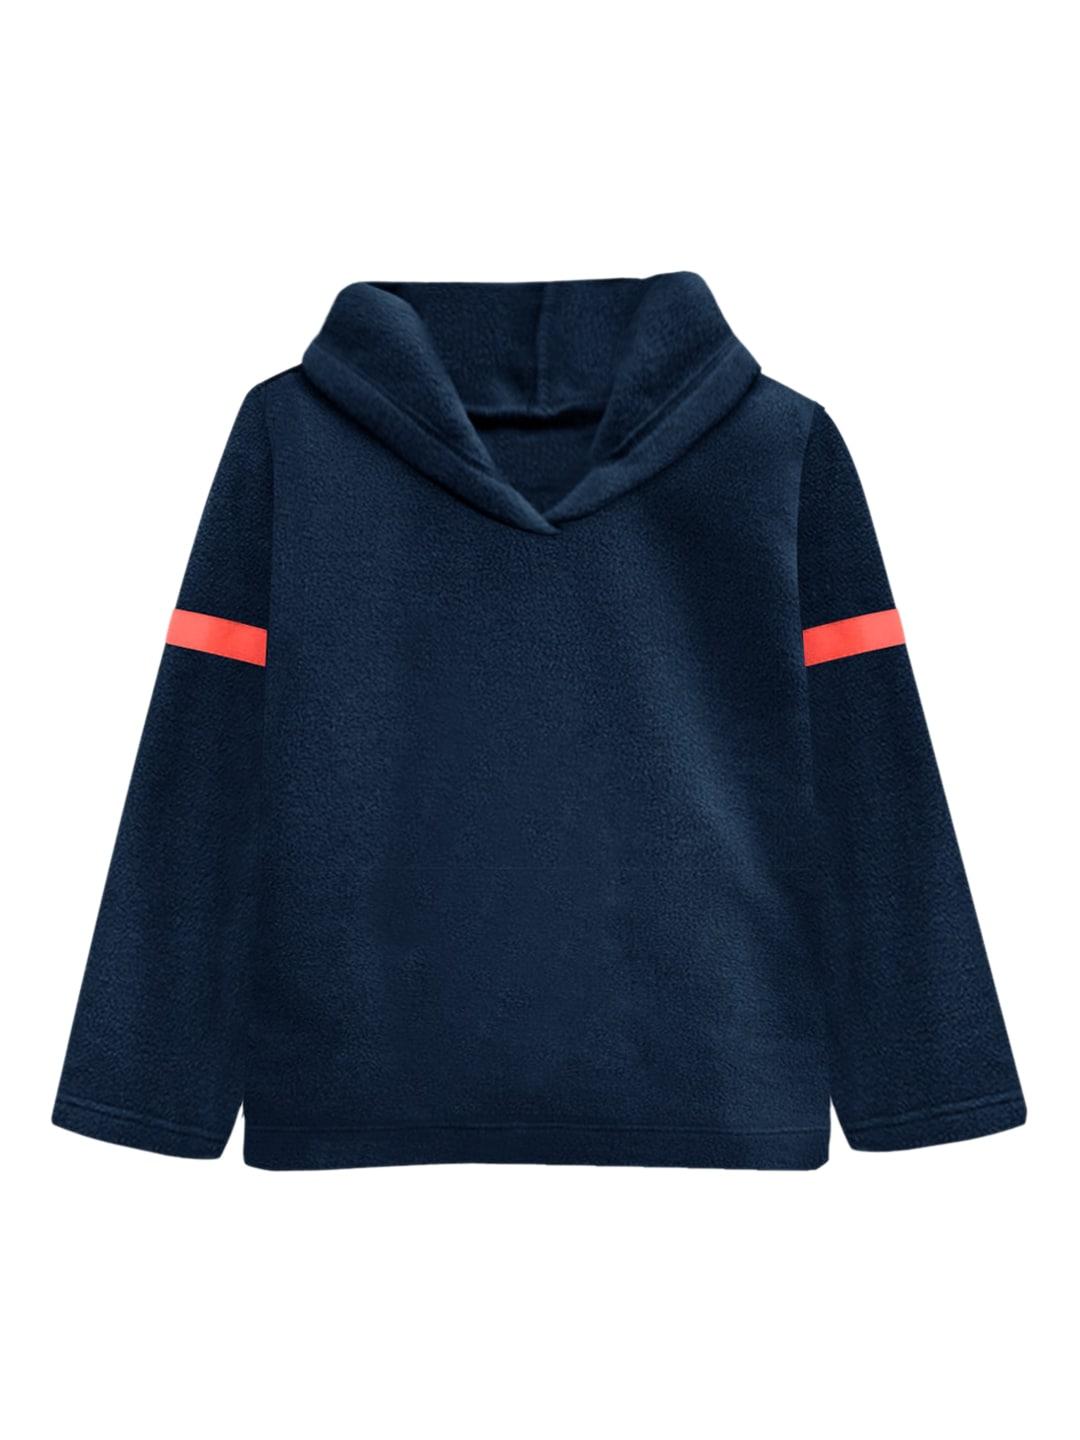 a t u n boys navy blue hooded sweatshirt